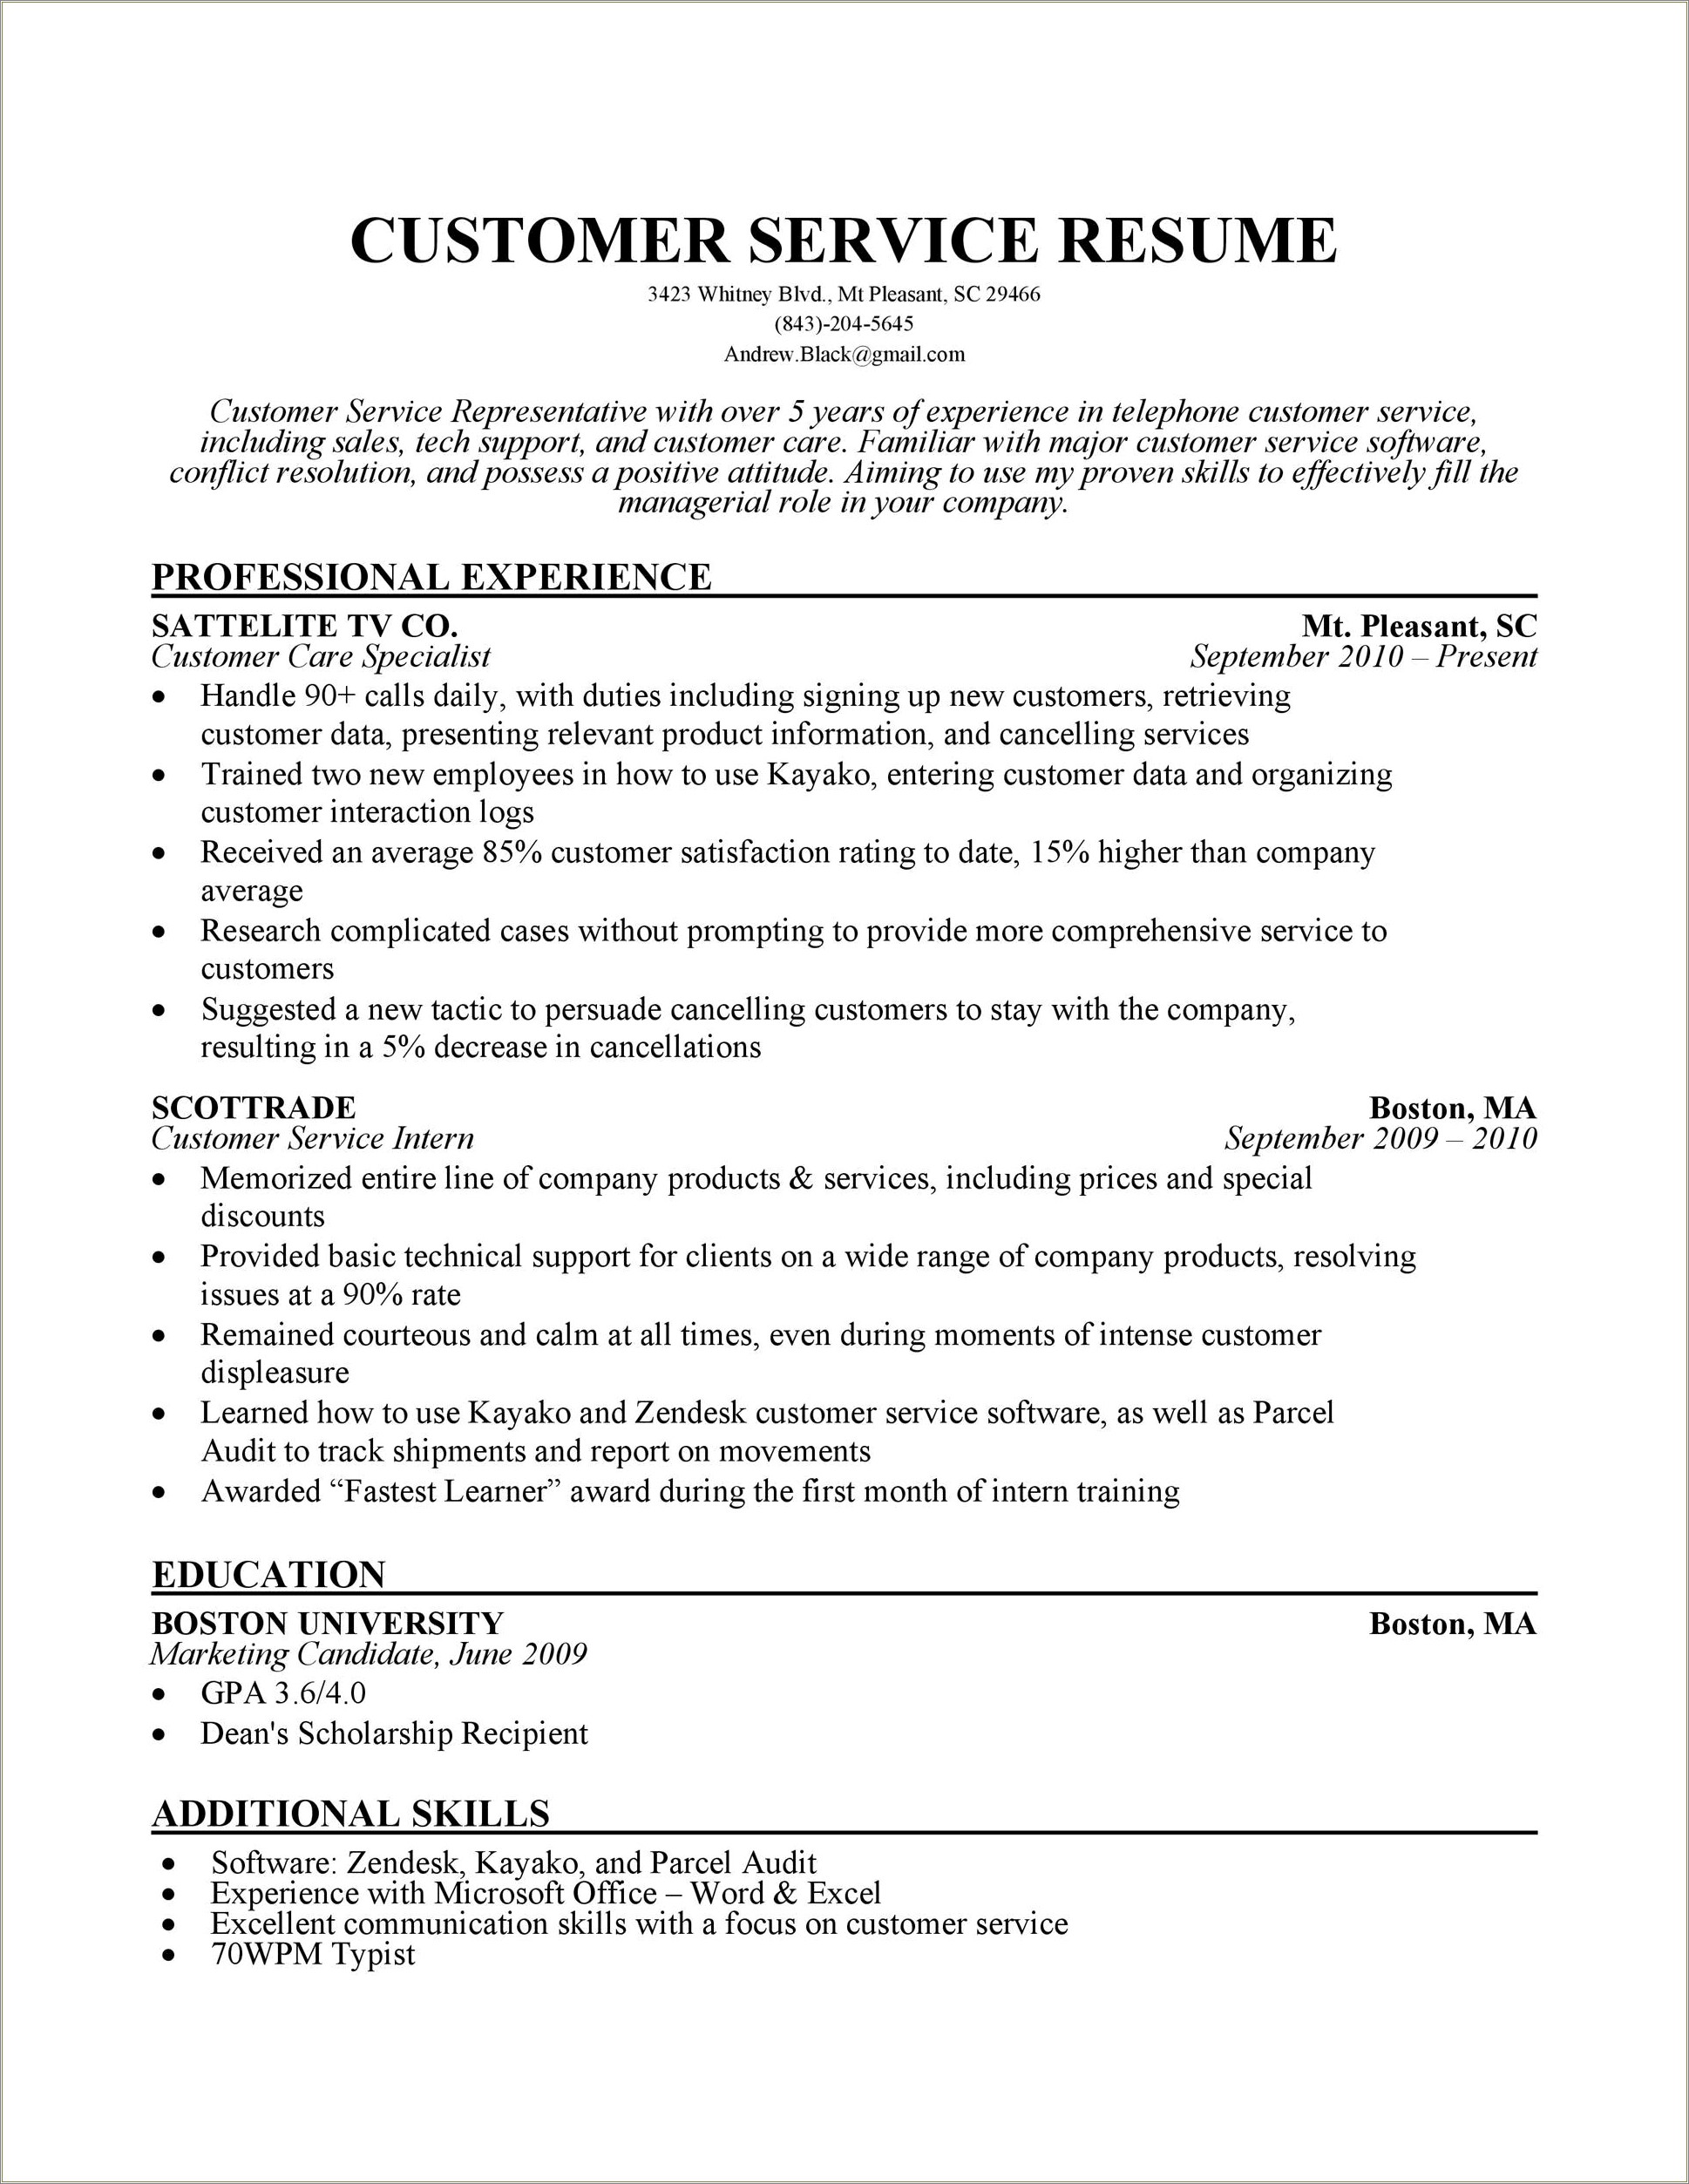 Customer Service Resume In Word Format